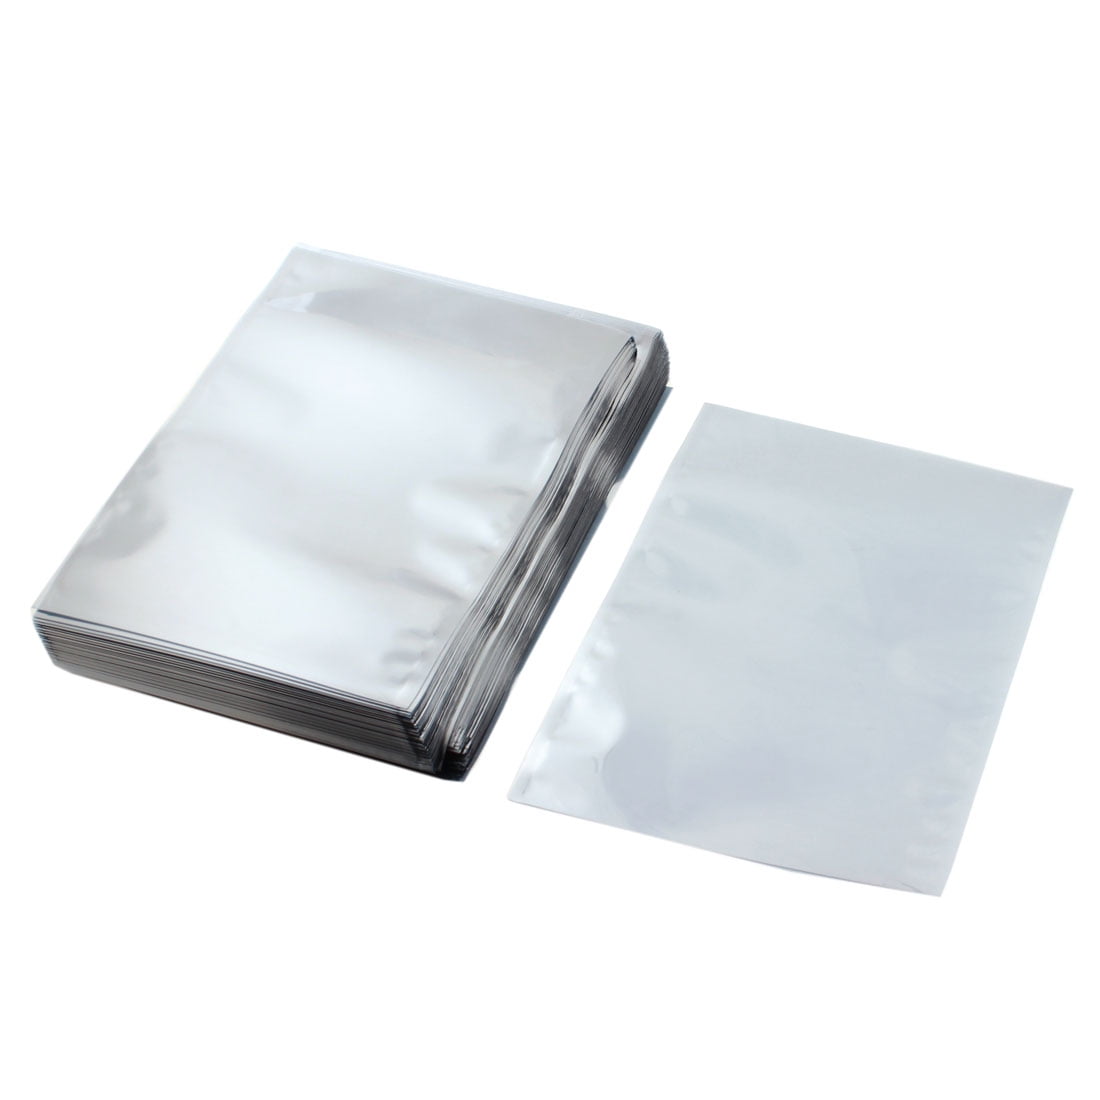 50PCS Aluminized ESD Anti Static Shielding Bags 50 x 80mm 2" x 3" 